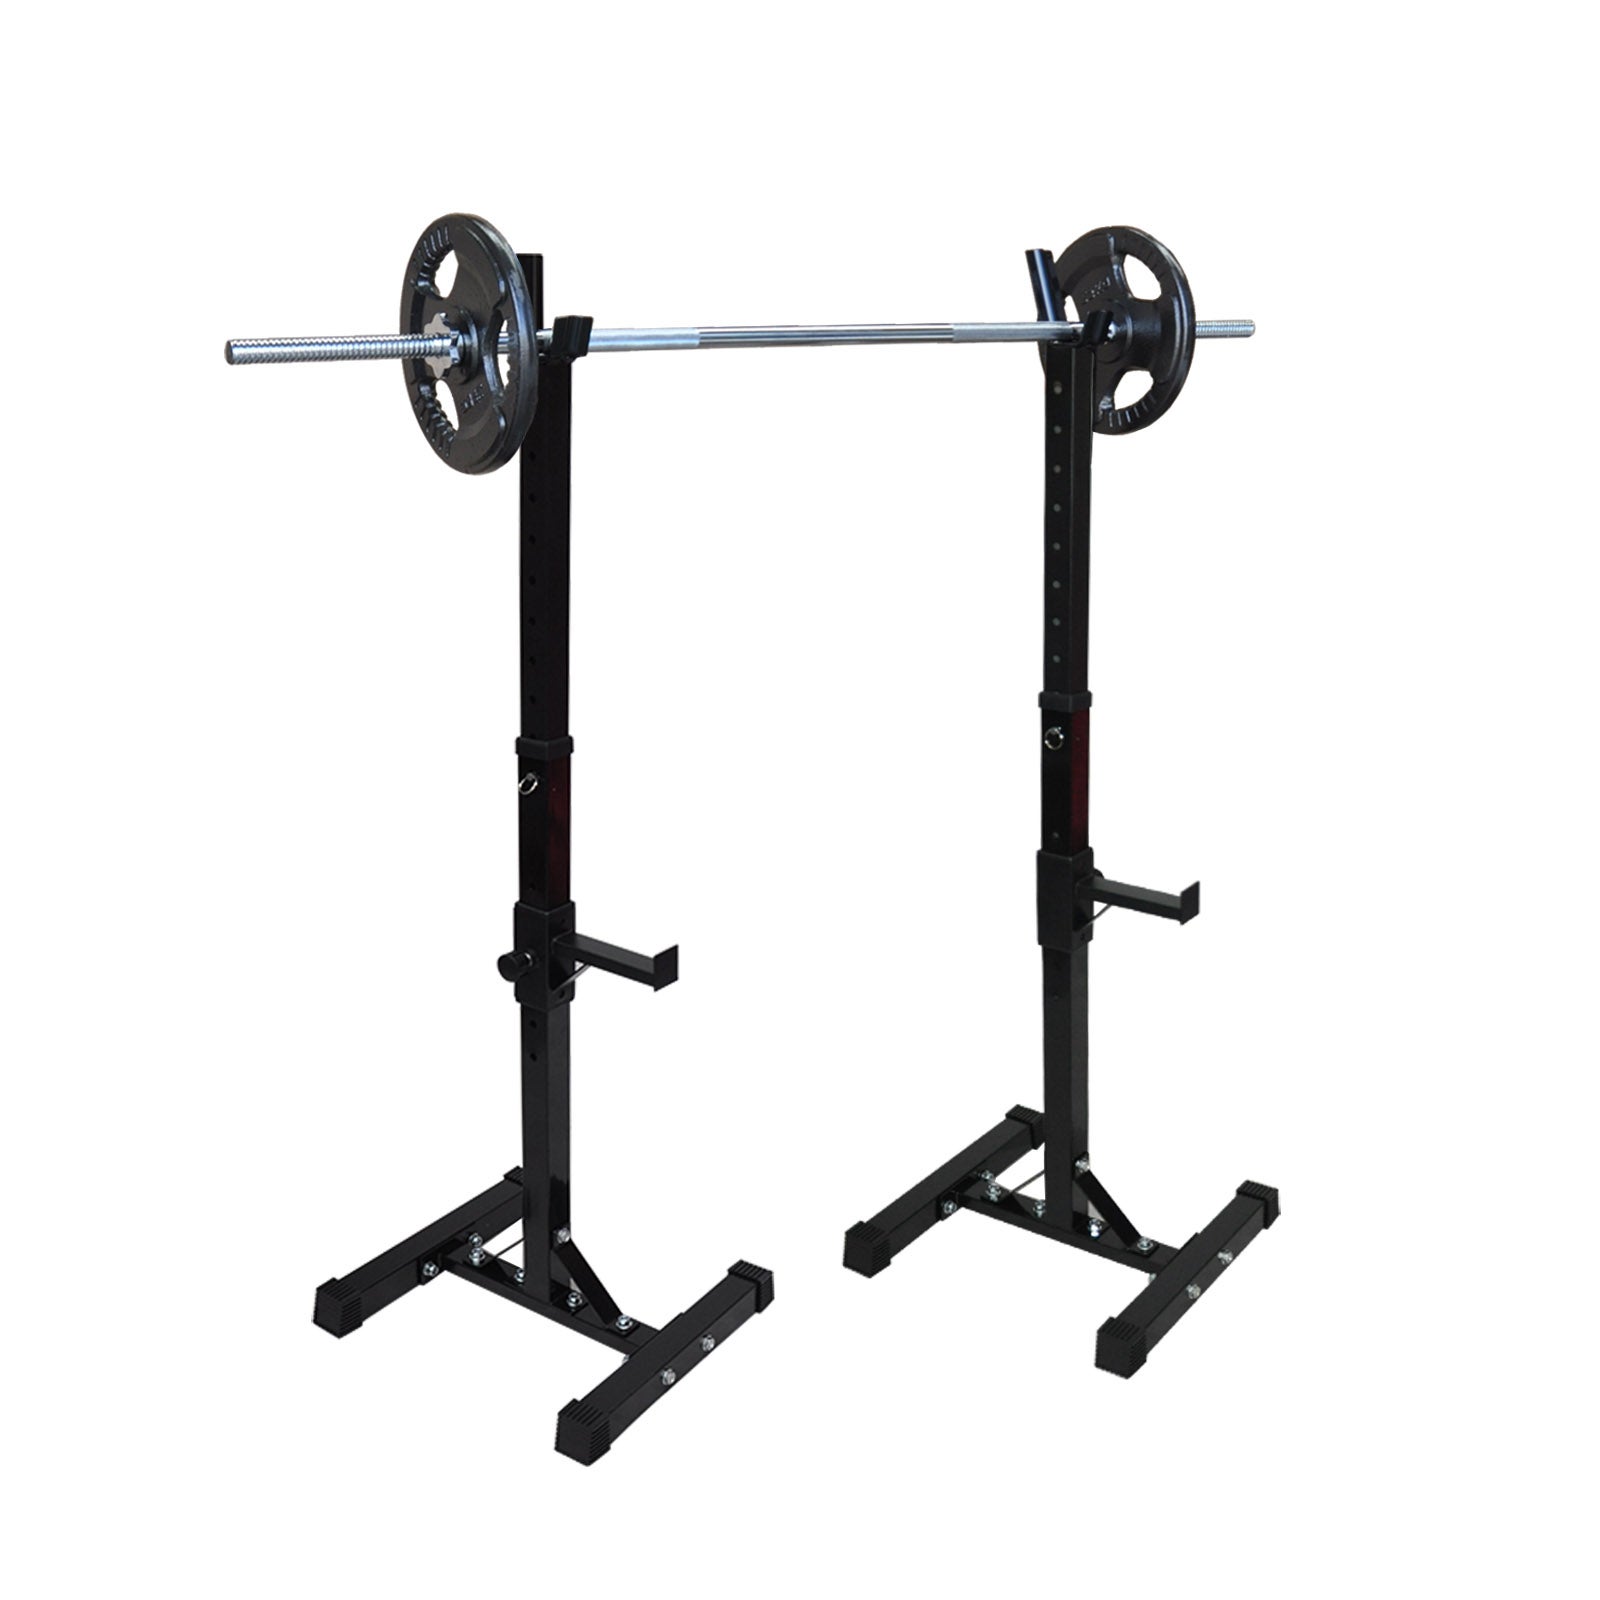 Adjustable Squat Rack - Home Gym Fitness Equipment